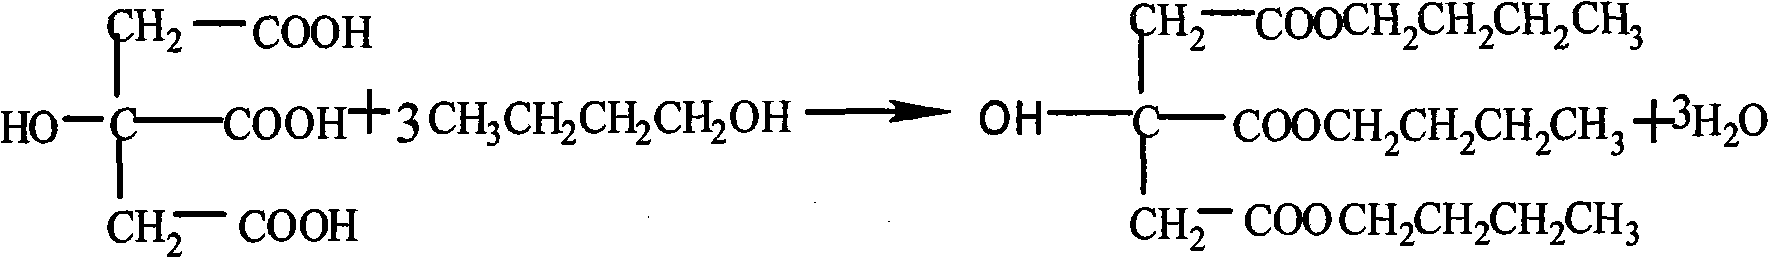 Method for preparing oleoyl tributyl citrate plasticizer